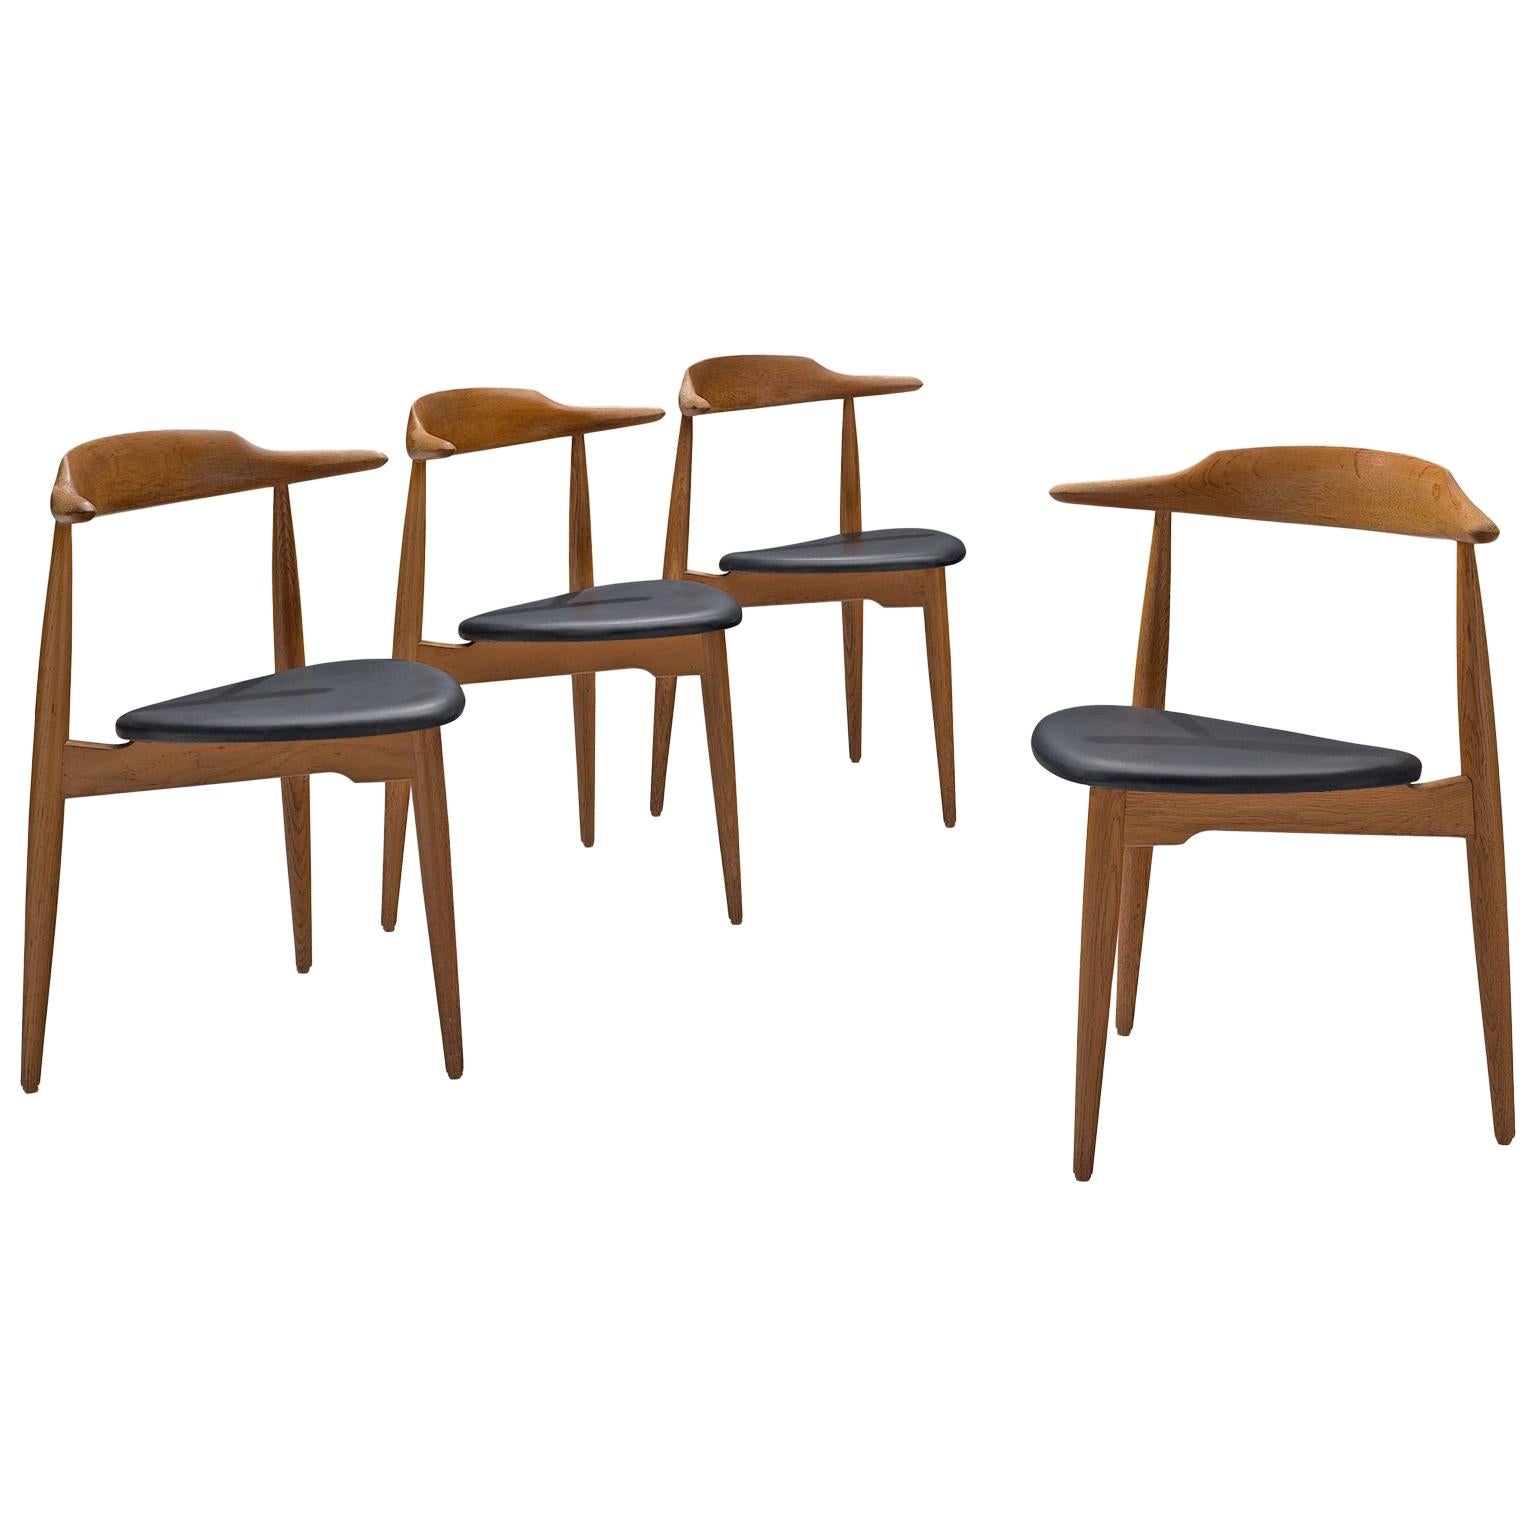 Hans J. Wegner Set of 4 "Heart" Chairs in Oak and Black Leatherette